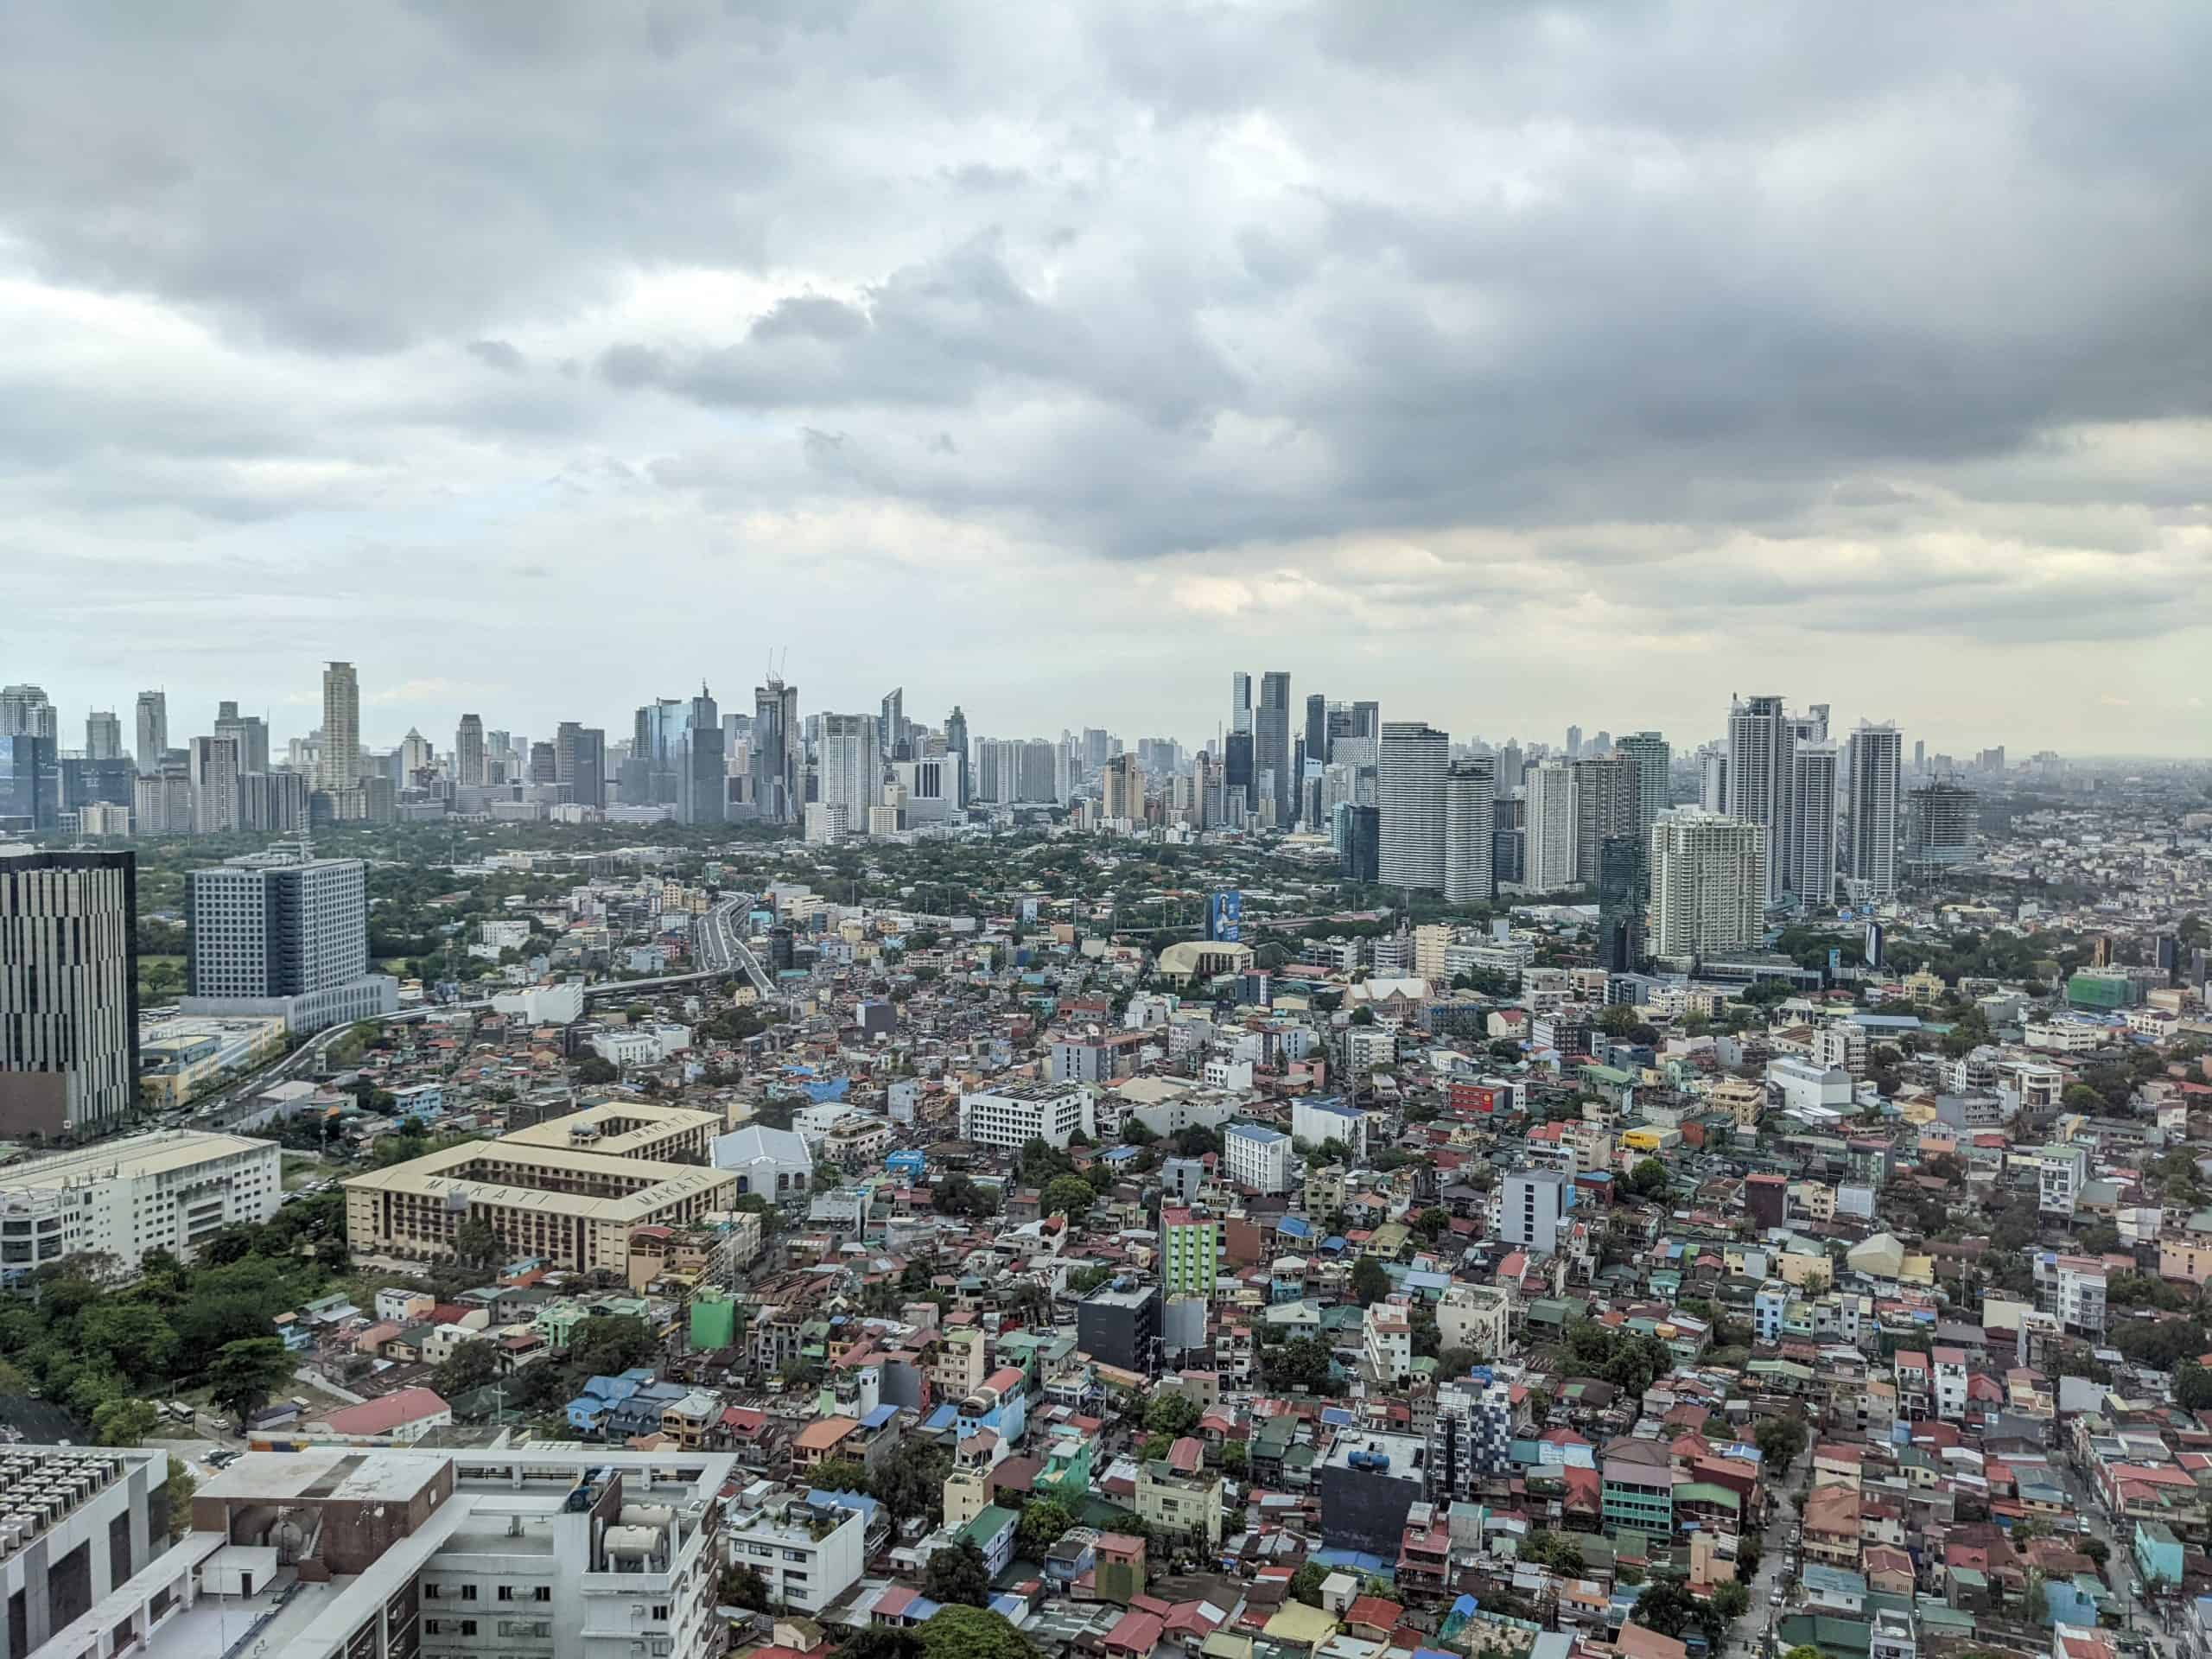 Makati (Metro Manila) skyline as seen from the Grand Hyatt in BGC, Taguig